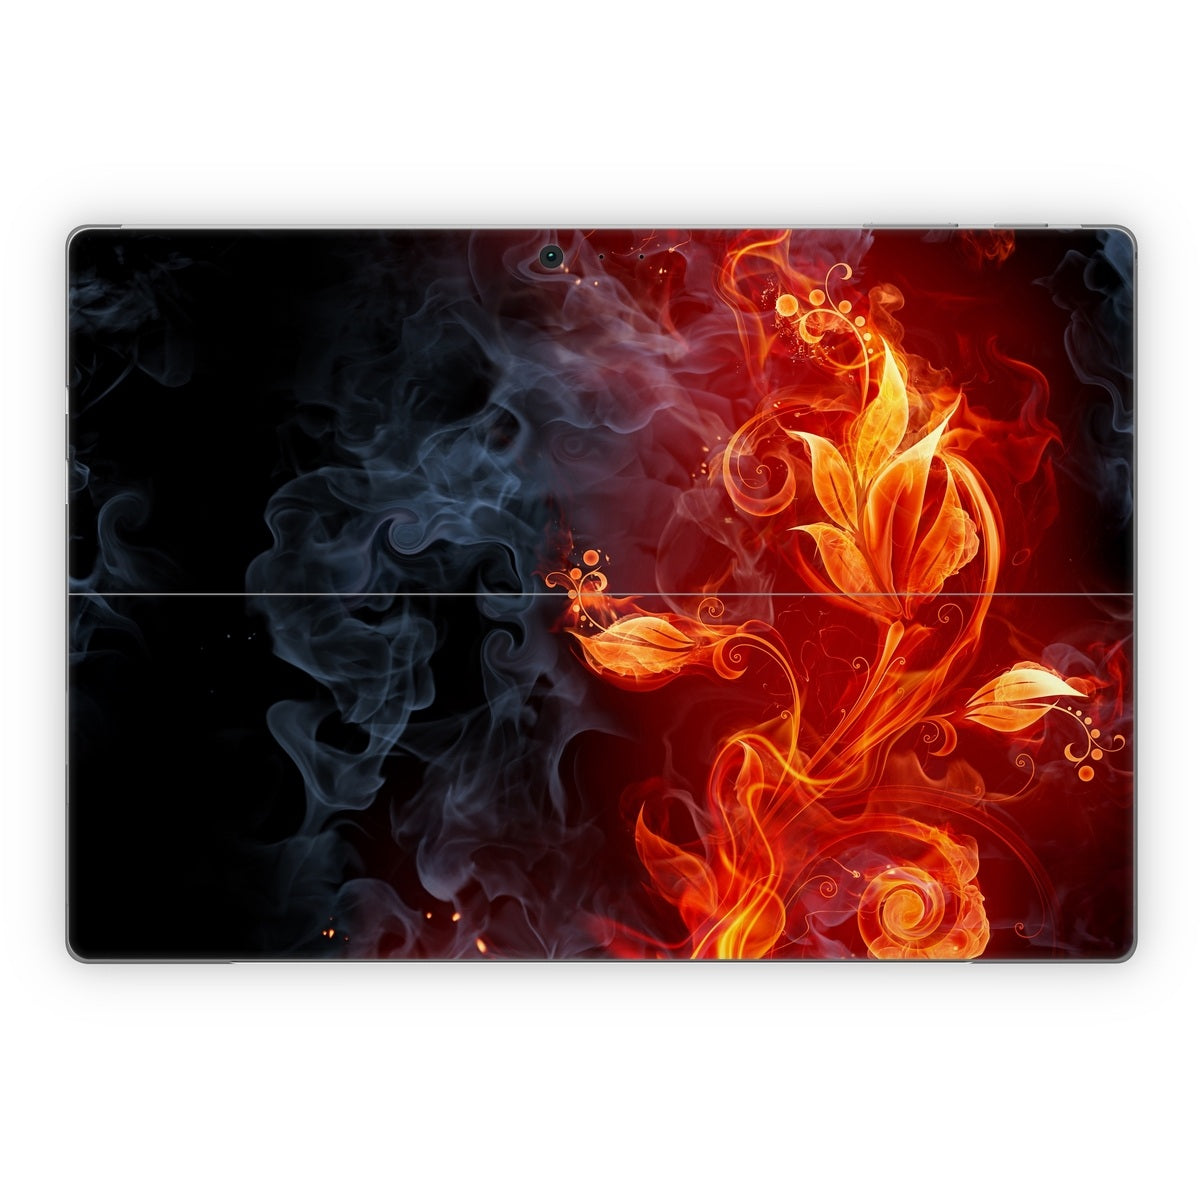 Flower Of Fire - Microsoft Surface Pro Skin